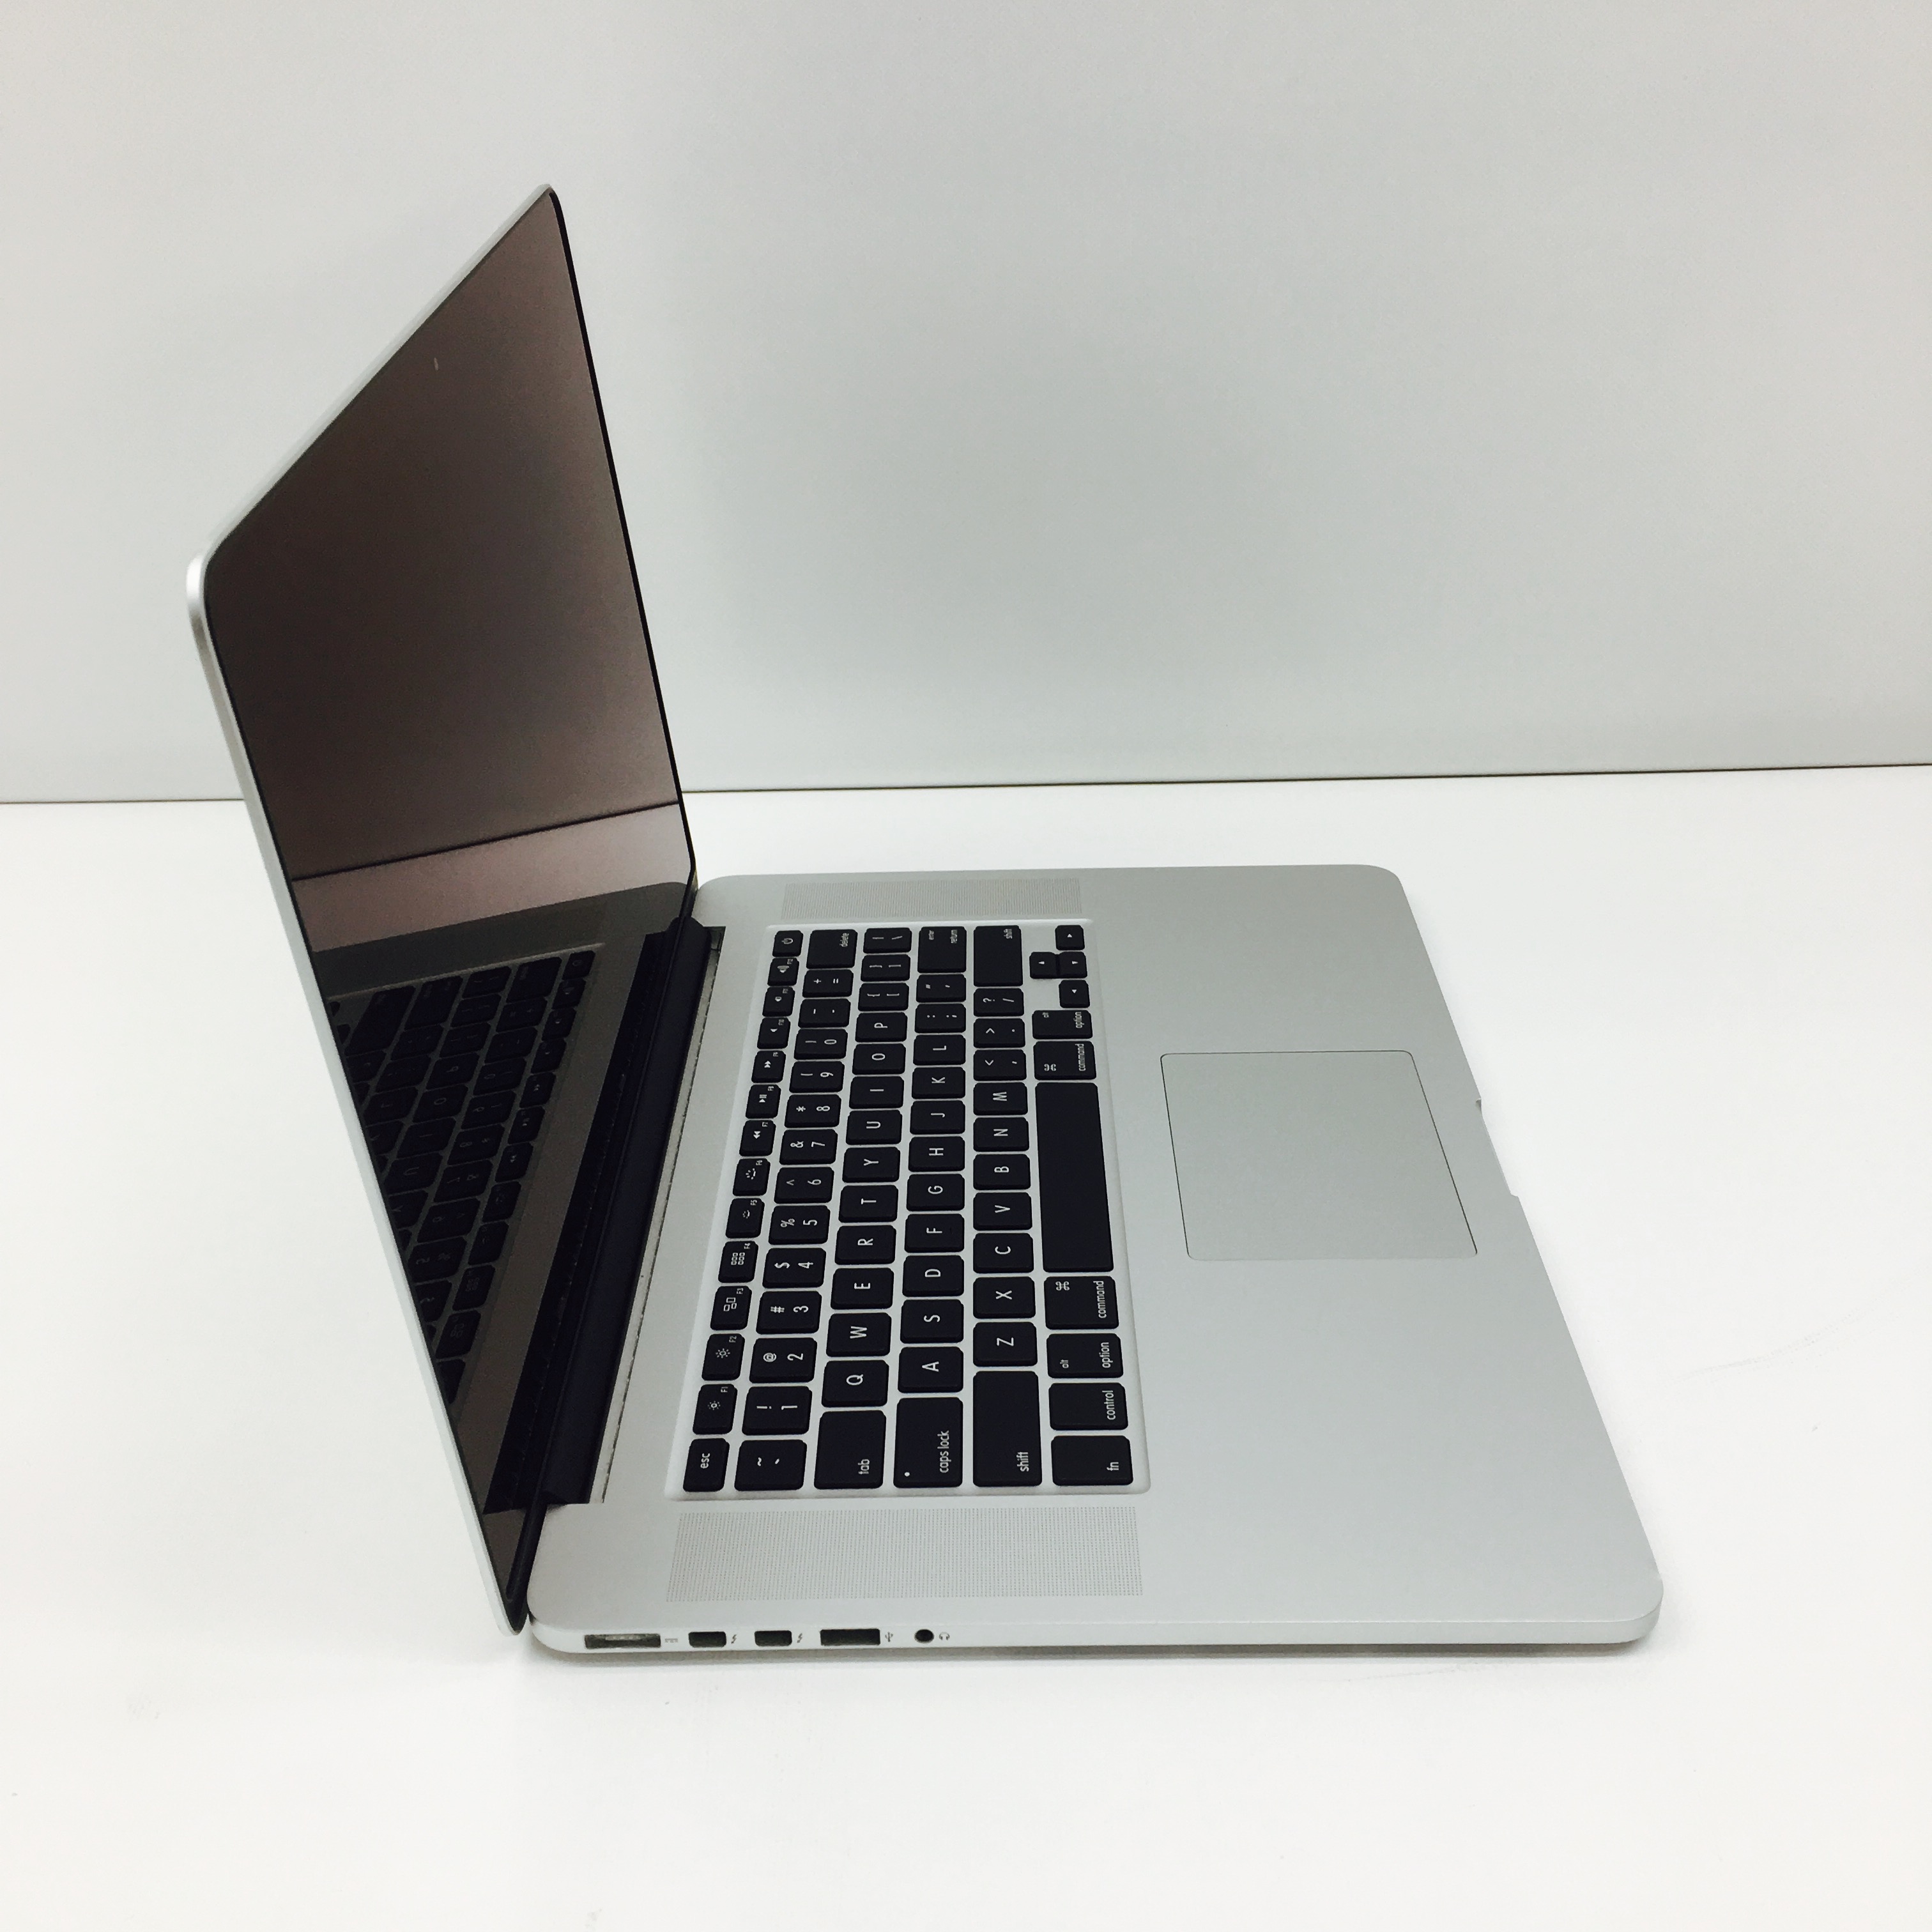 Fully Refurbished MacBook Pro Retina 15" Mid 2014 INTEL CORE I7 2.2GHZ